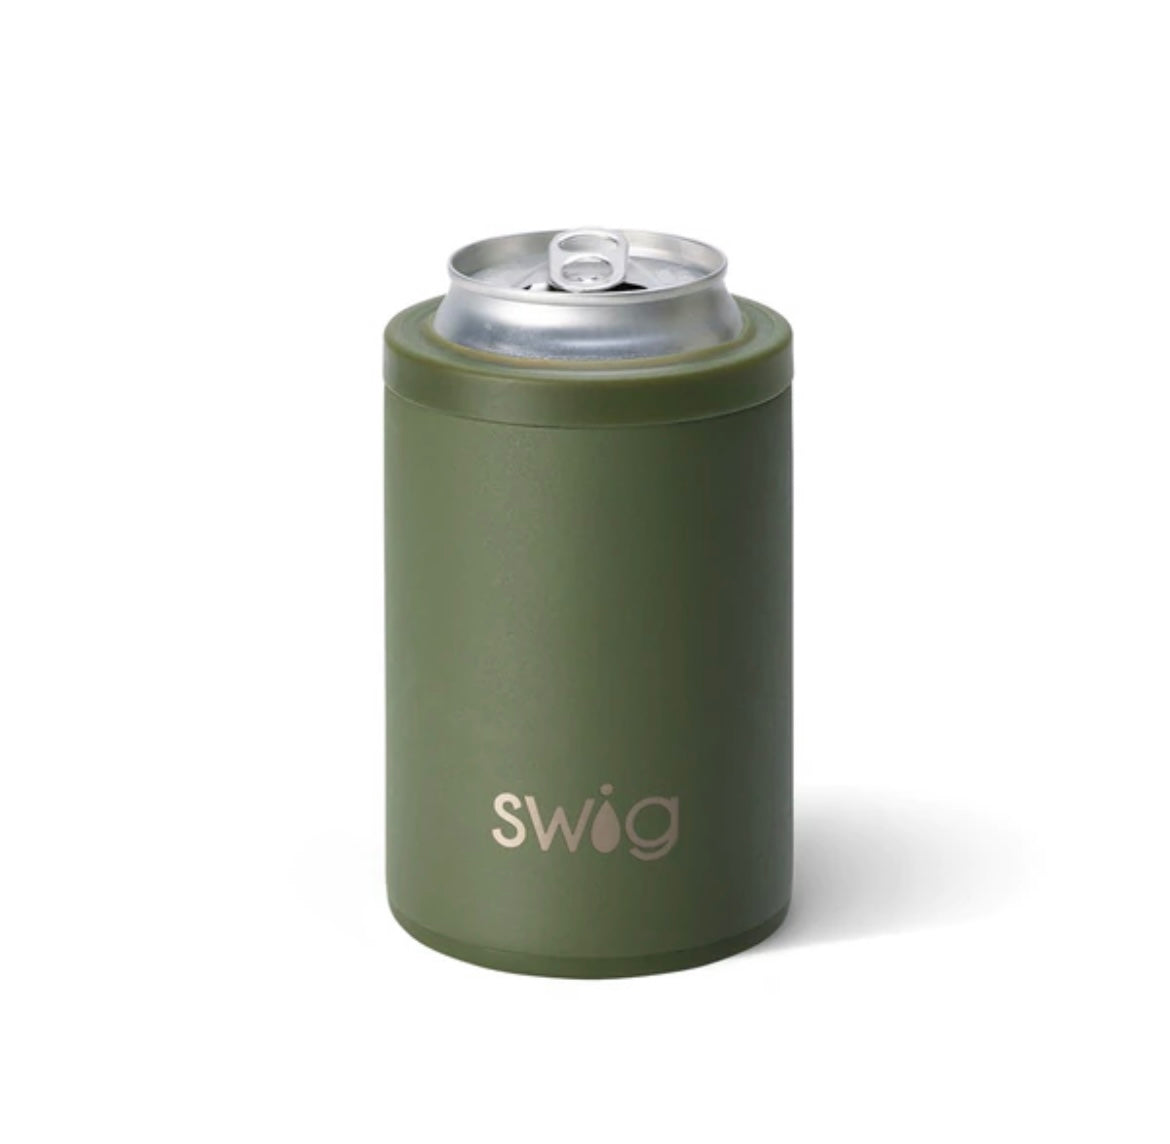 Swig Olive Can Cooler